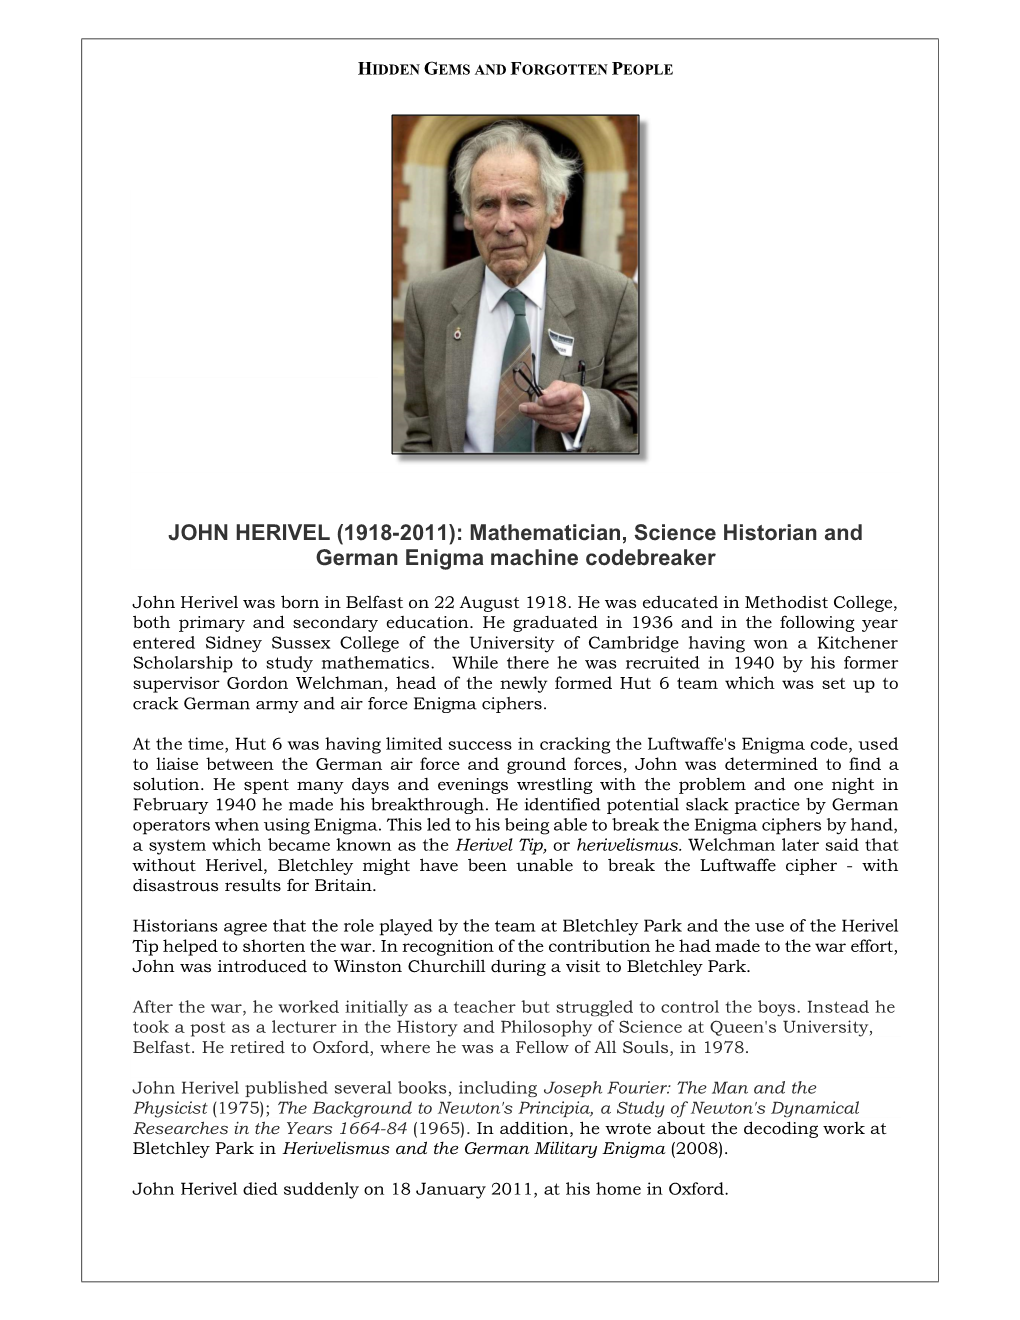 JOHN HERIVEL (1918-2011): Mathematician, Science Historian and German Enigma Machine Codebreaker